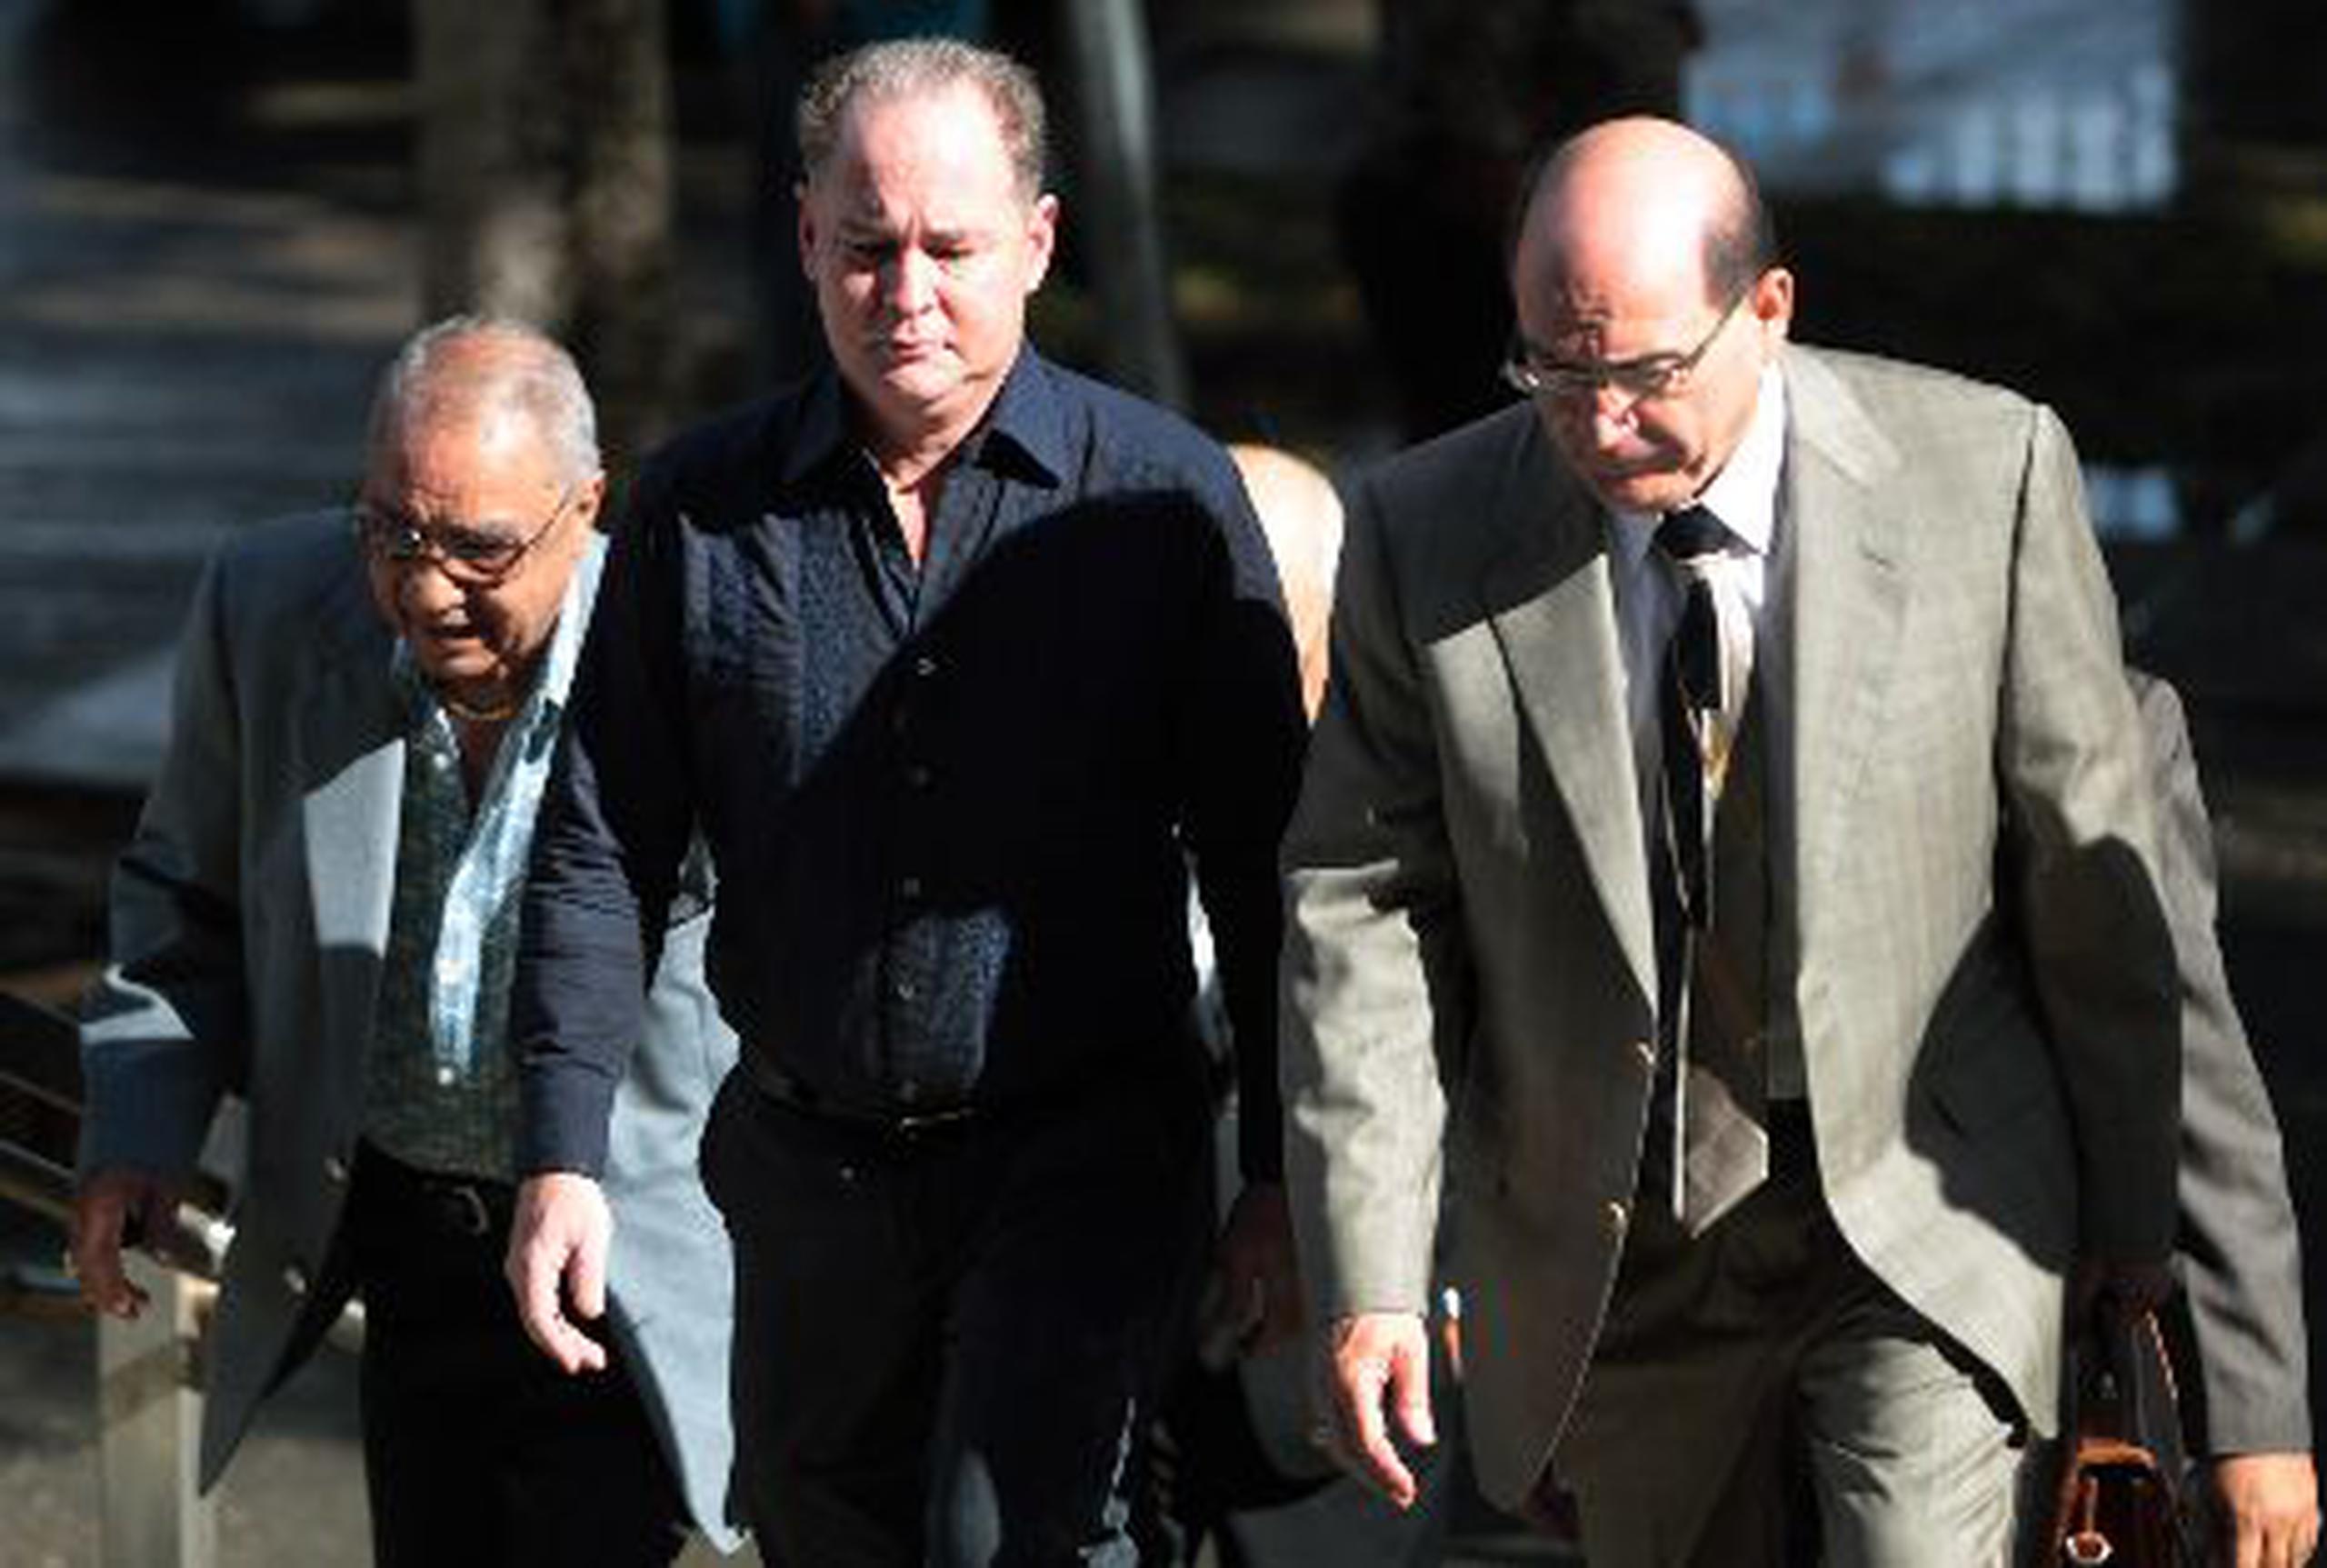  Pablo Casellas Toro llegó al tribunal acompañado por su abogado Harry Padilla. &nbsp;<font color="yellow">(teresa.canino@gfrmedia.com)</font>